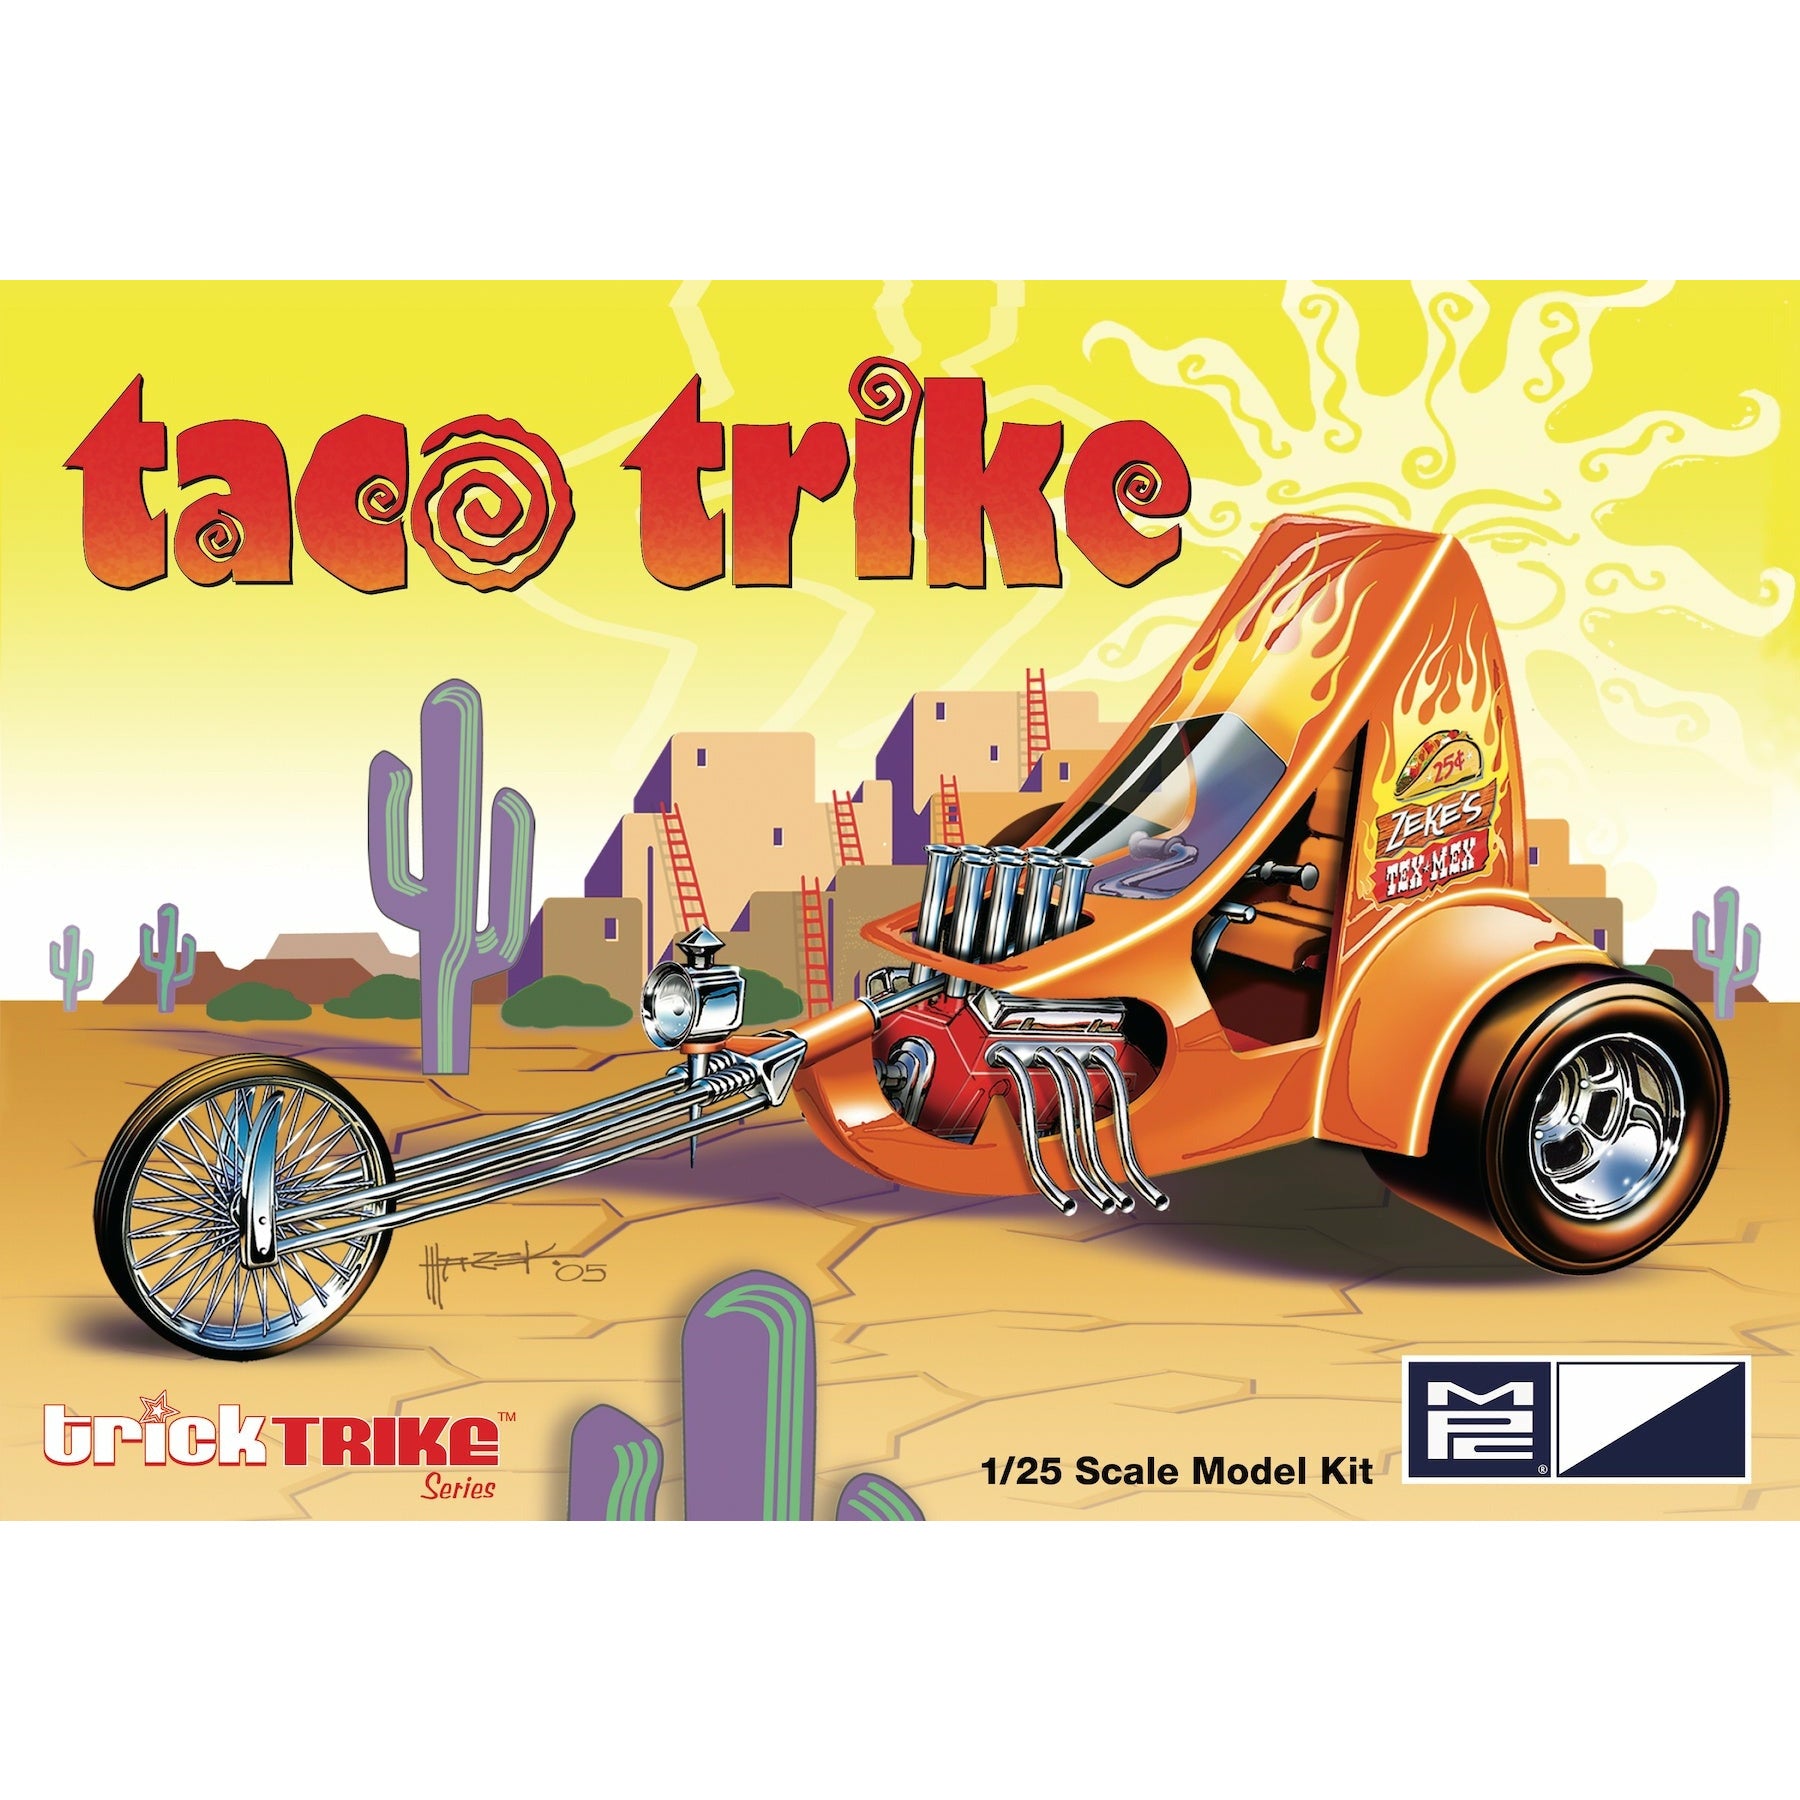 Taco Trike 1/25 Model Vehicle Kit #893 by MPC